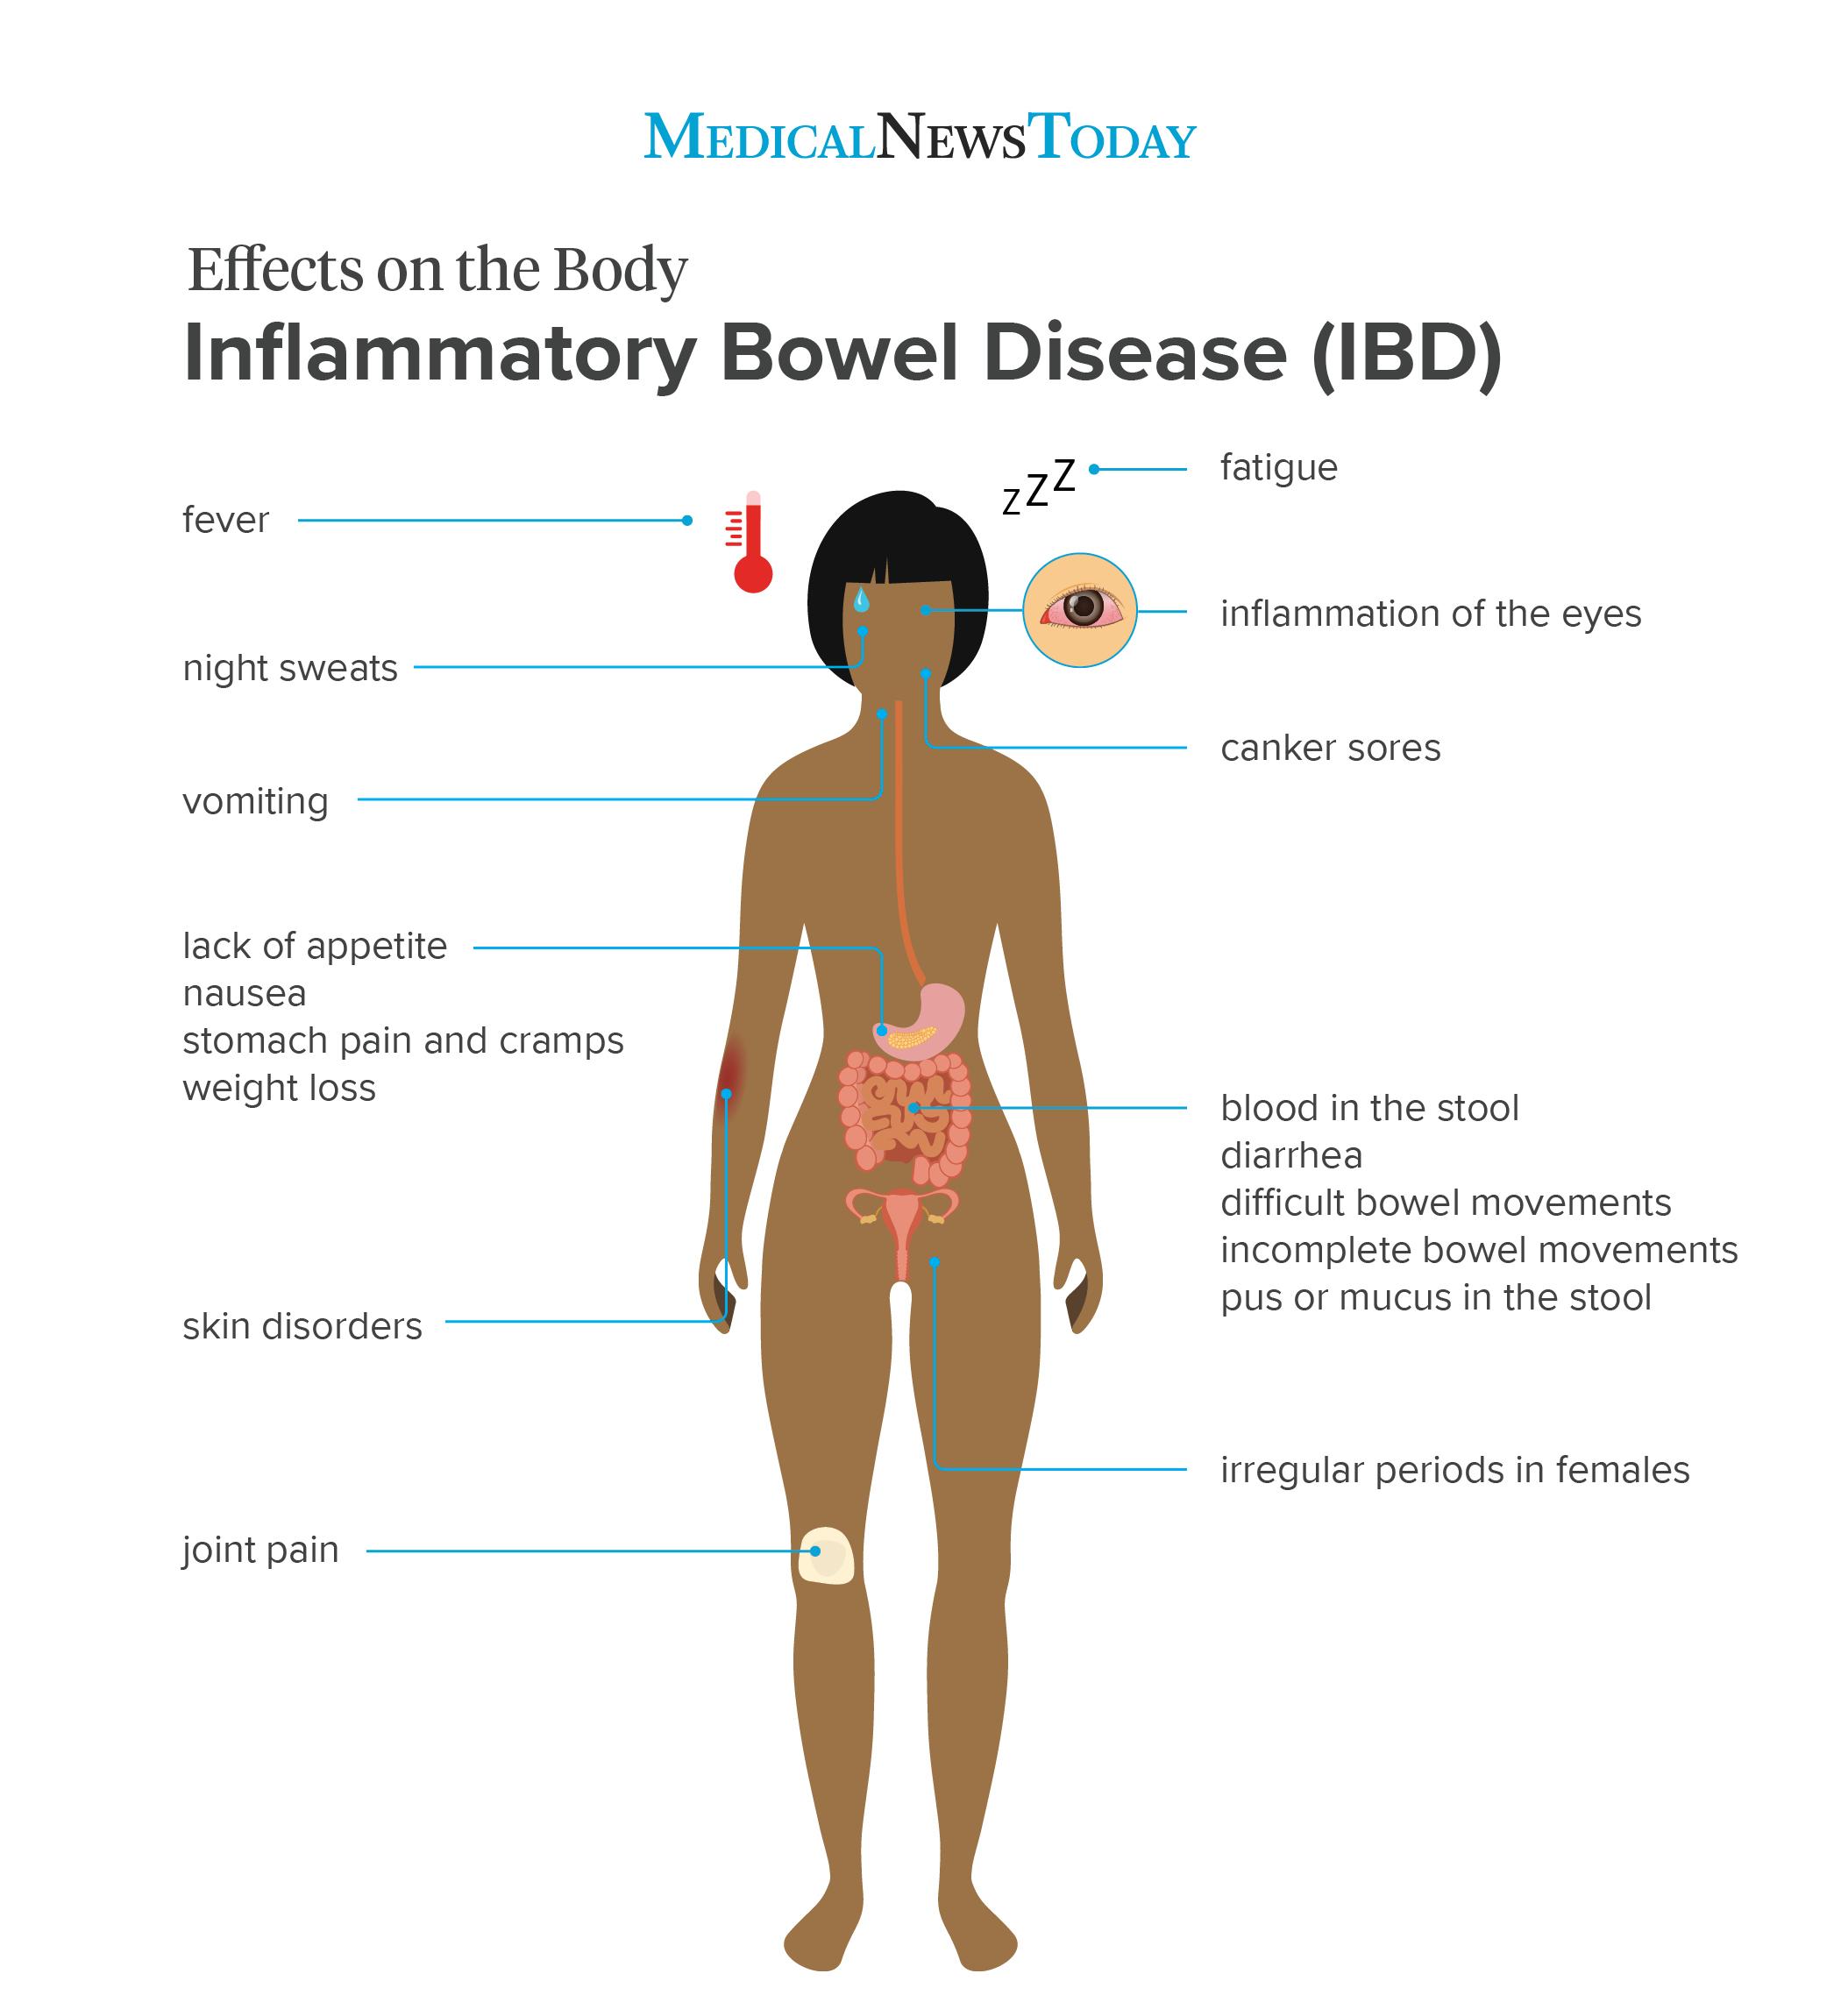 Inflammatory bowel disease: Causes, symptoms, and treatments